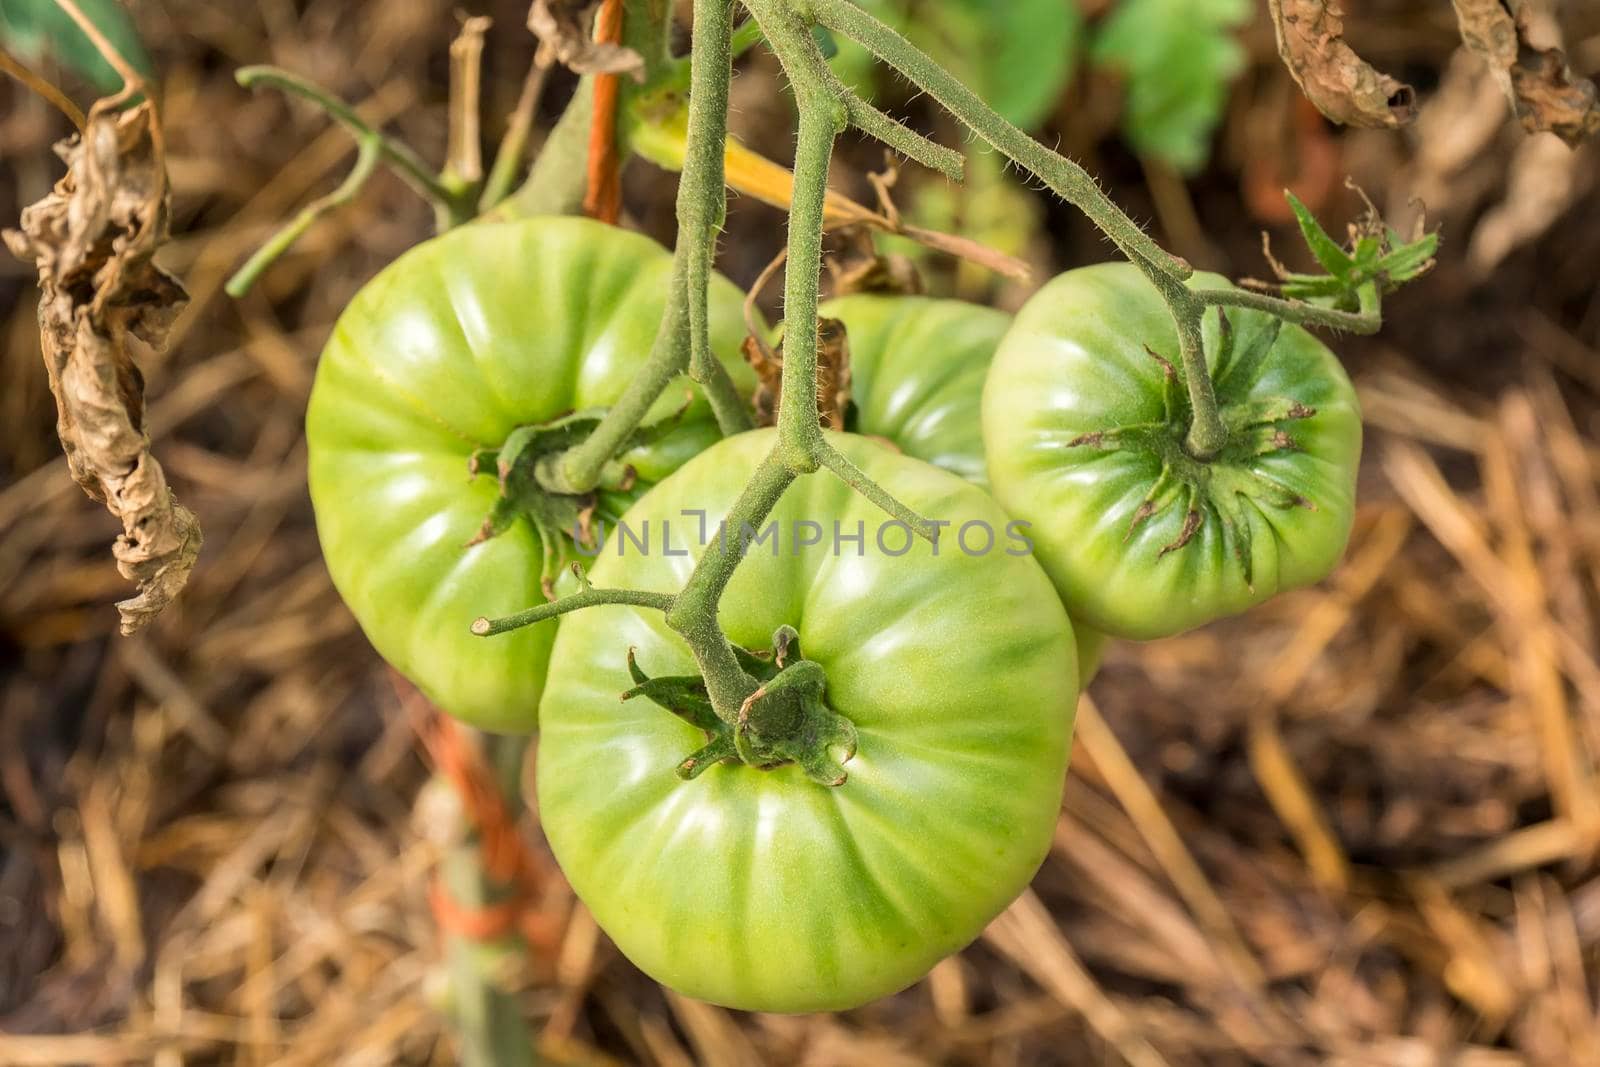 Unripe green tomatoes still on the bush.